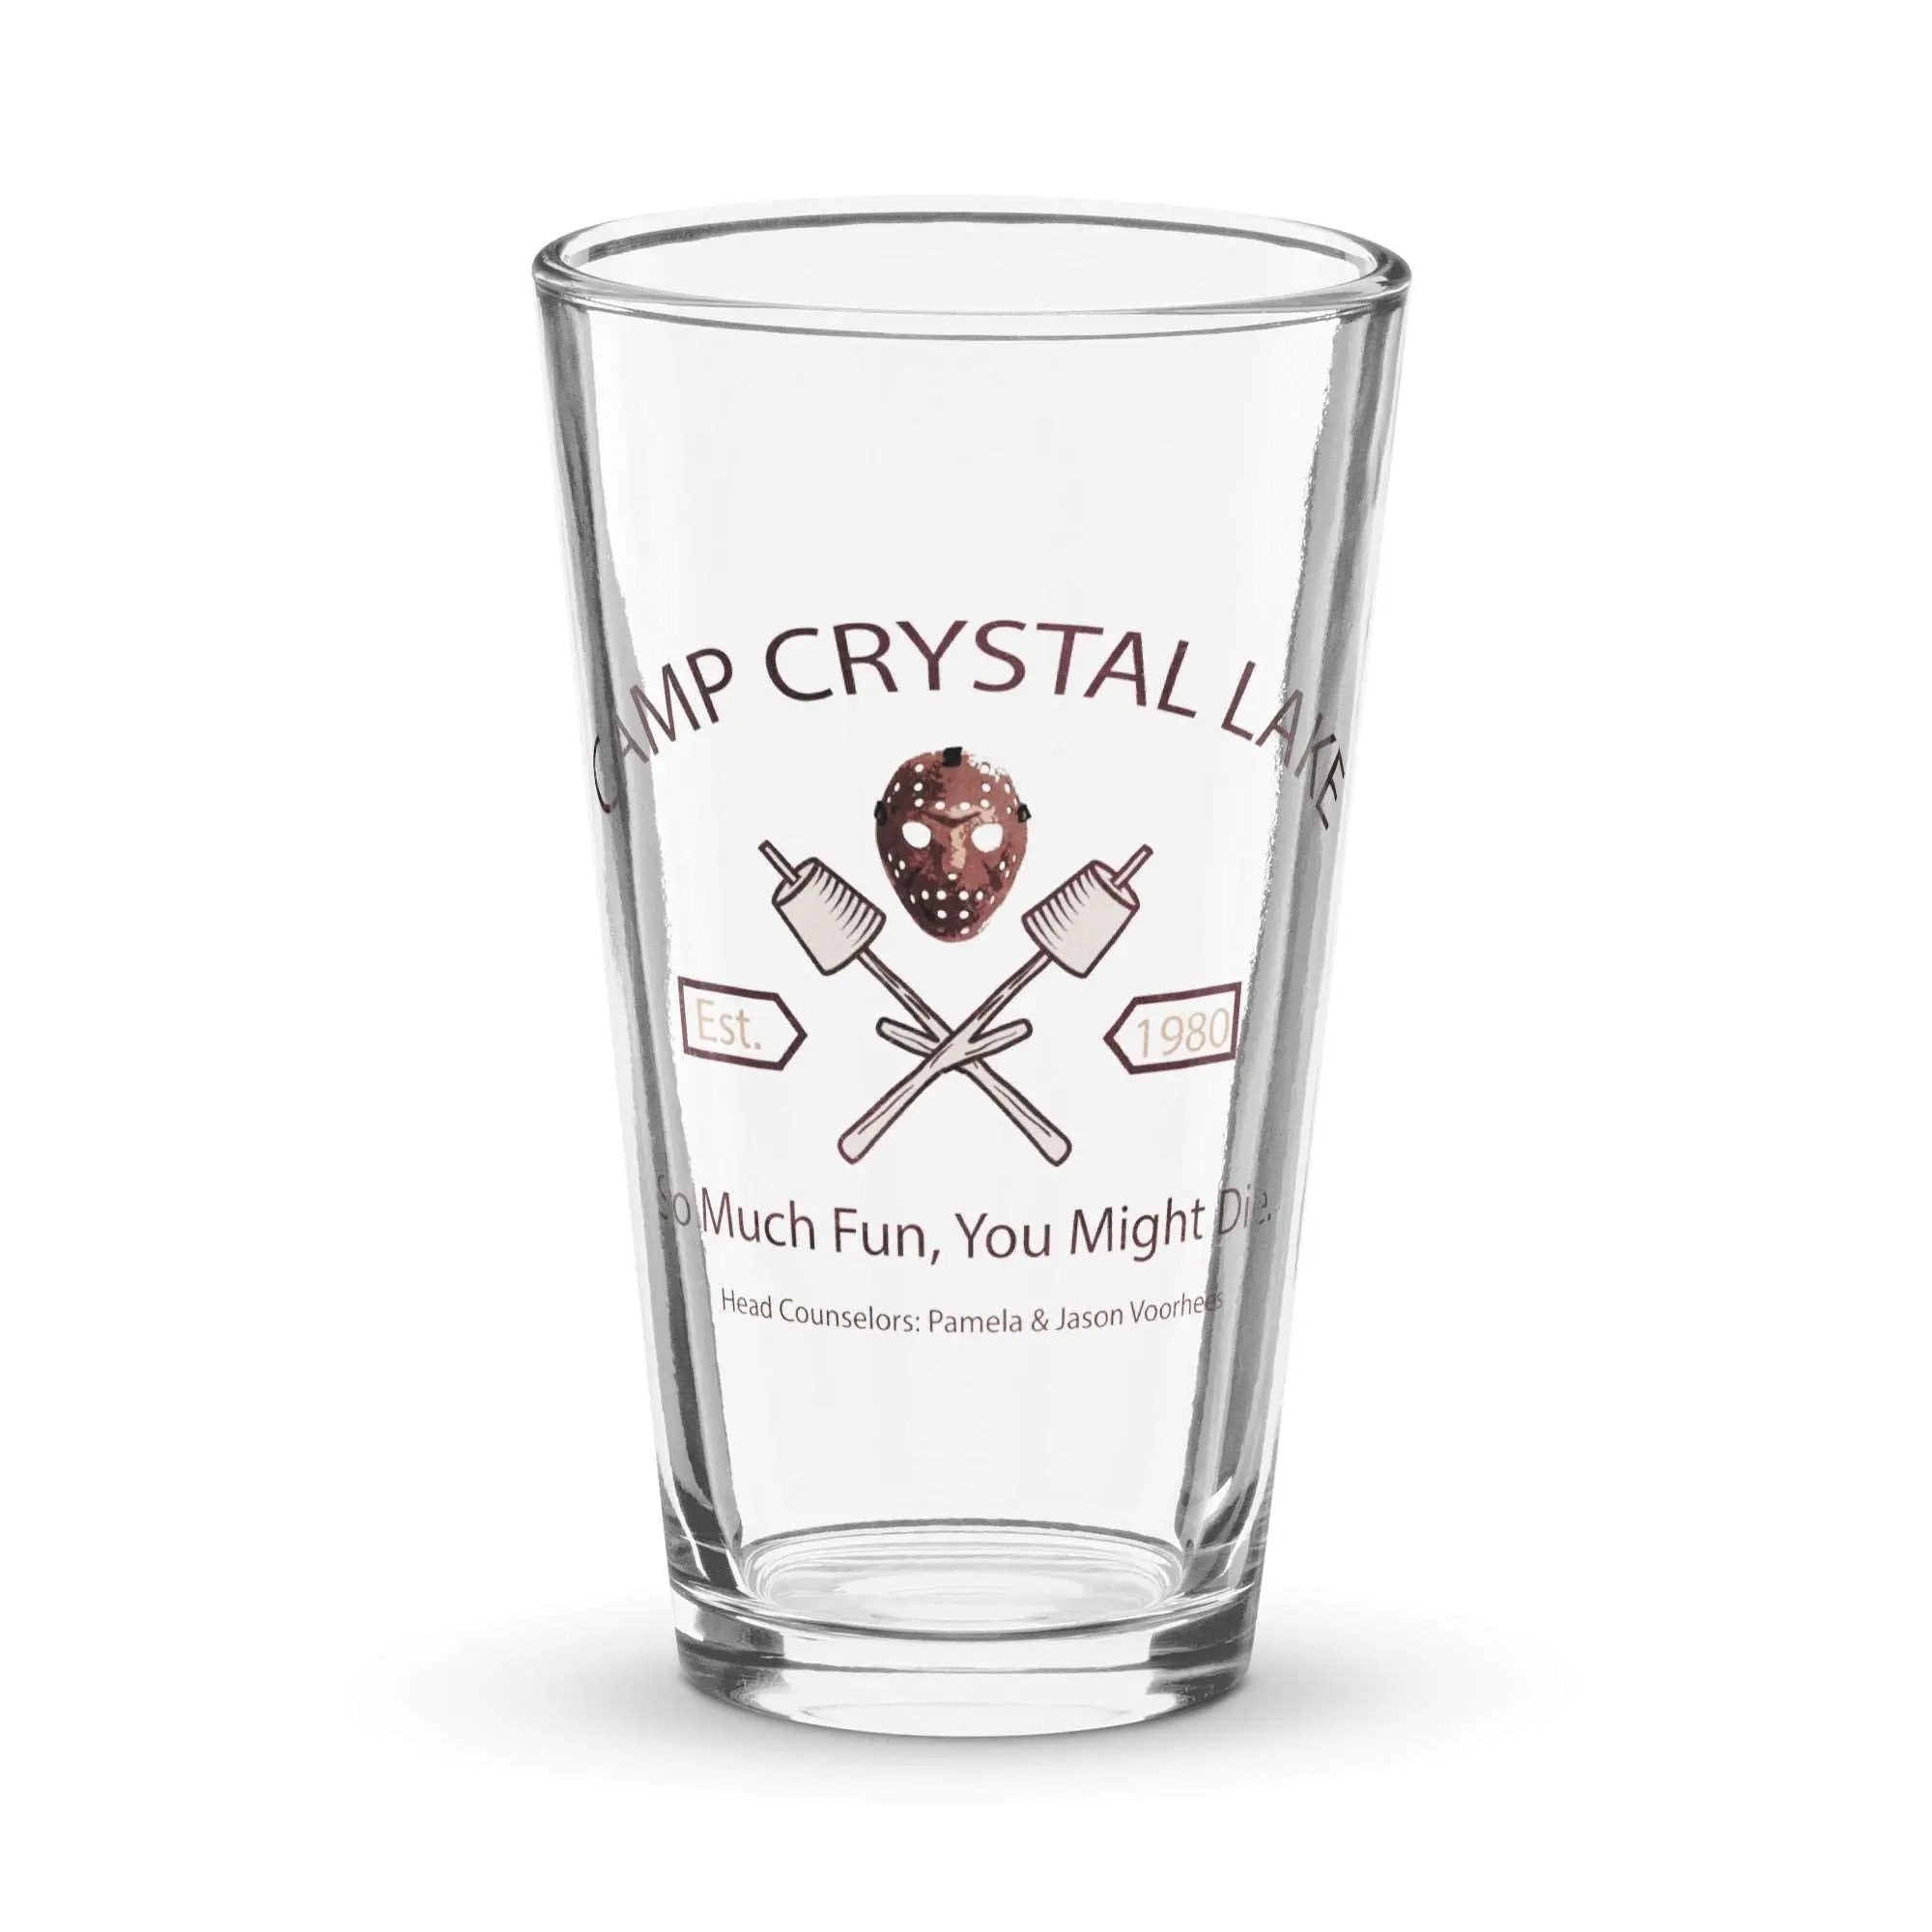 Camp Crystal Lake Shaker pint glass